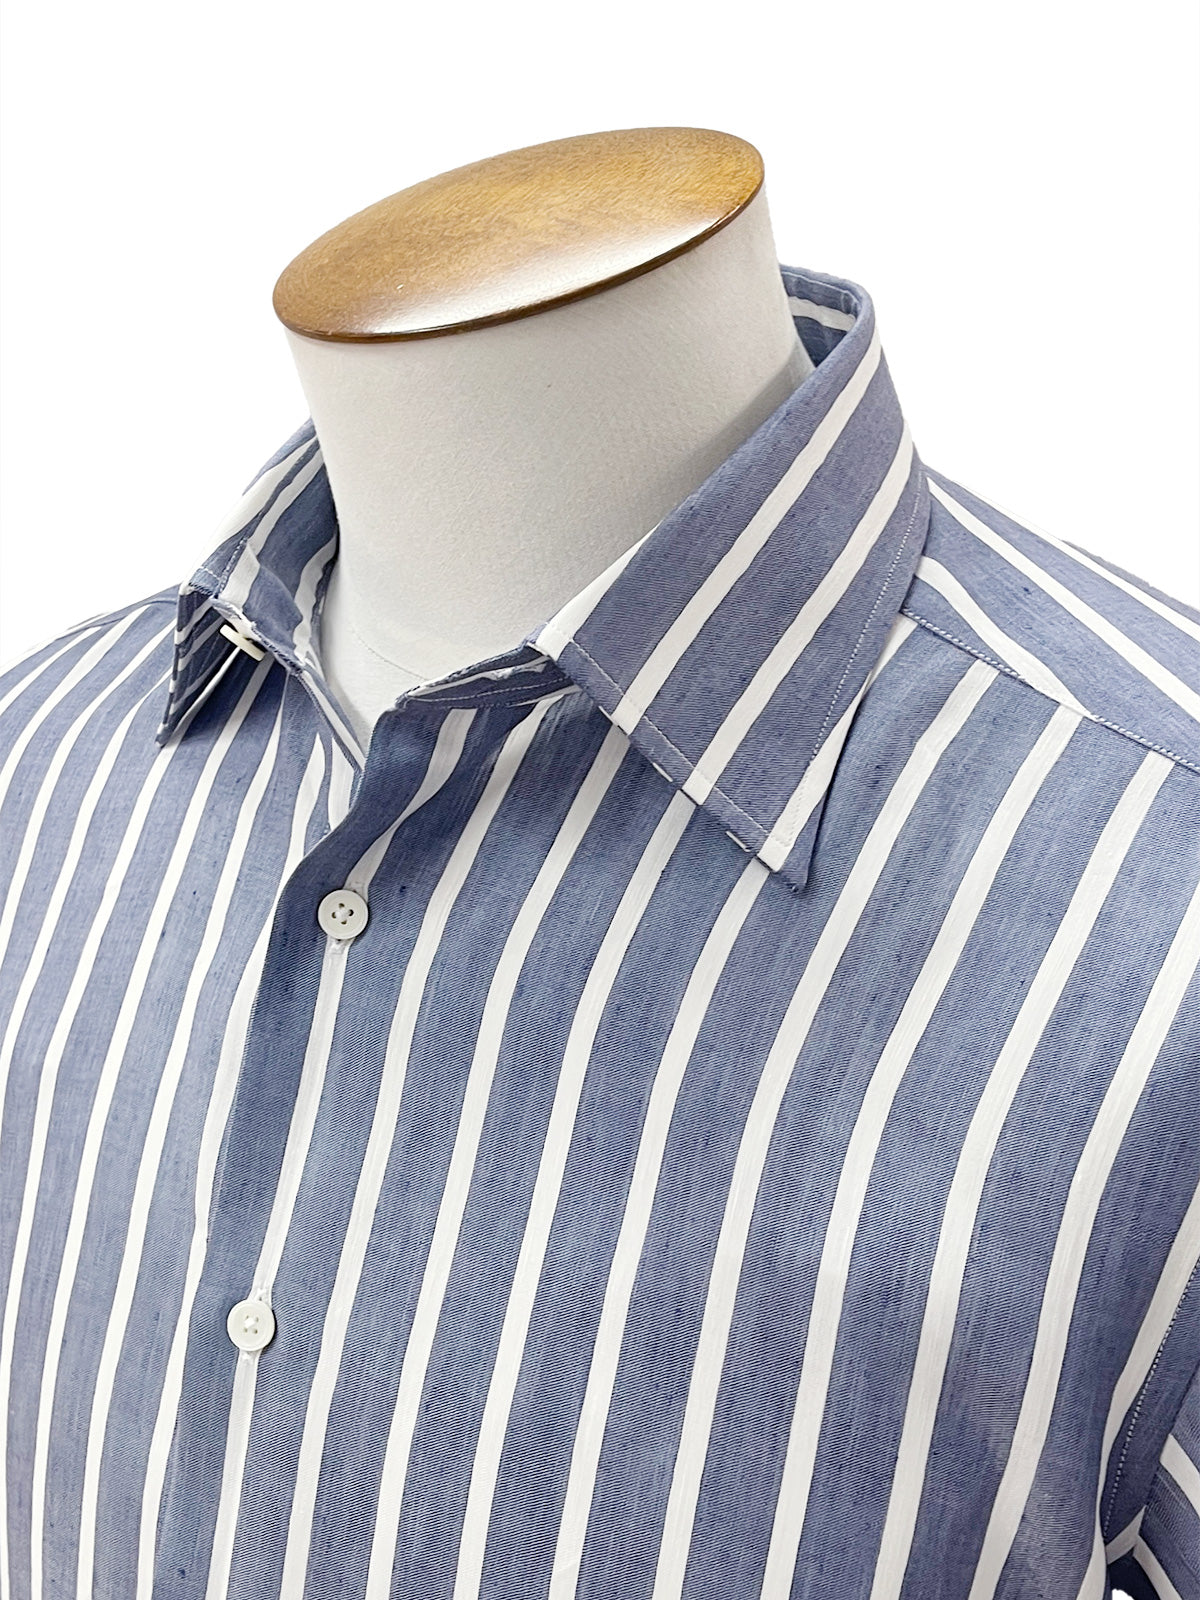 Indigo & White Bengal Stripe Linen Shirt